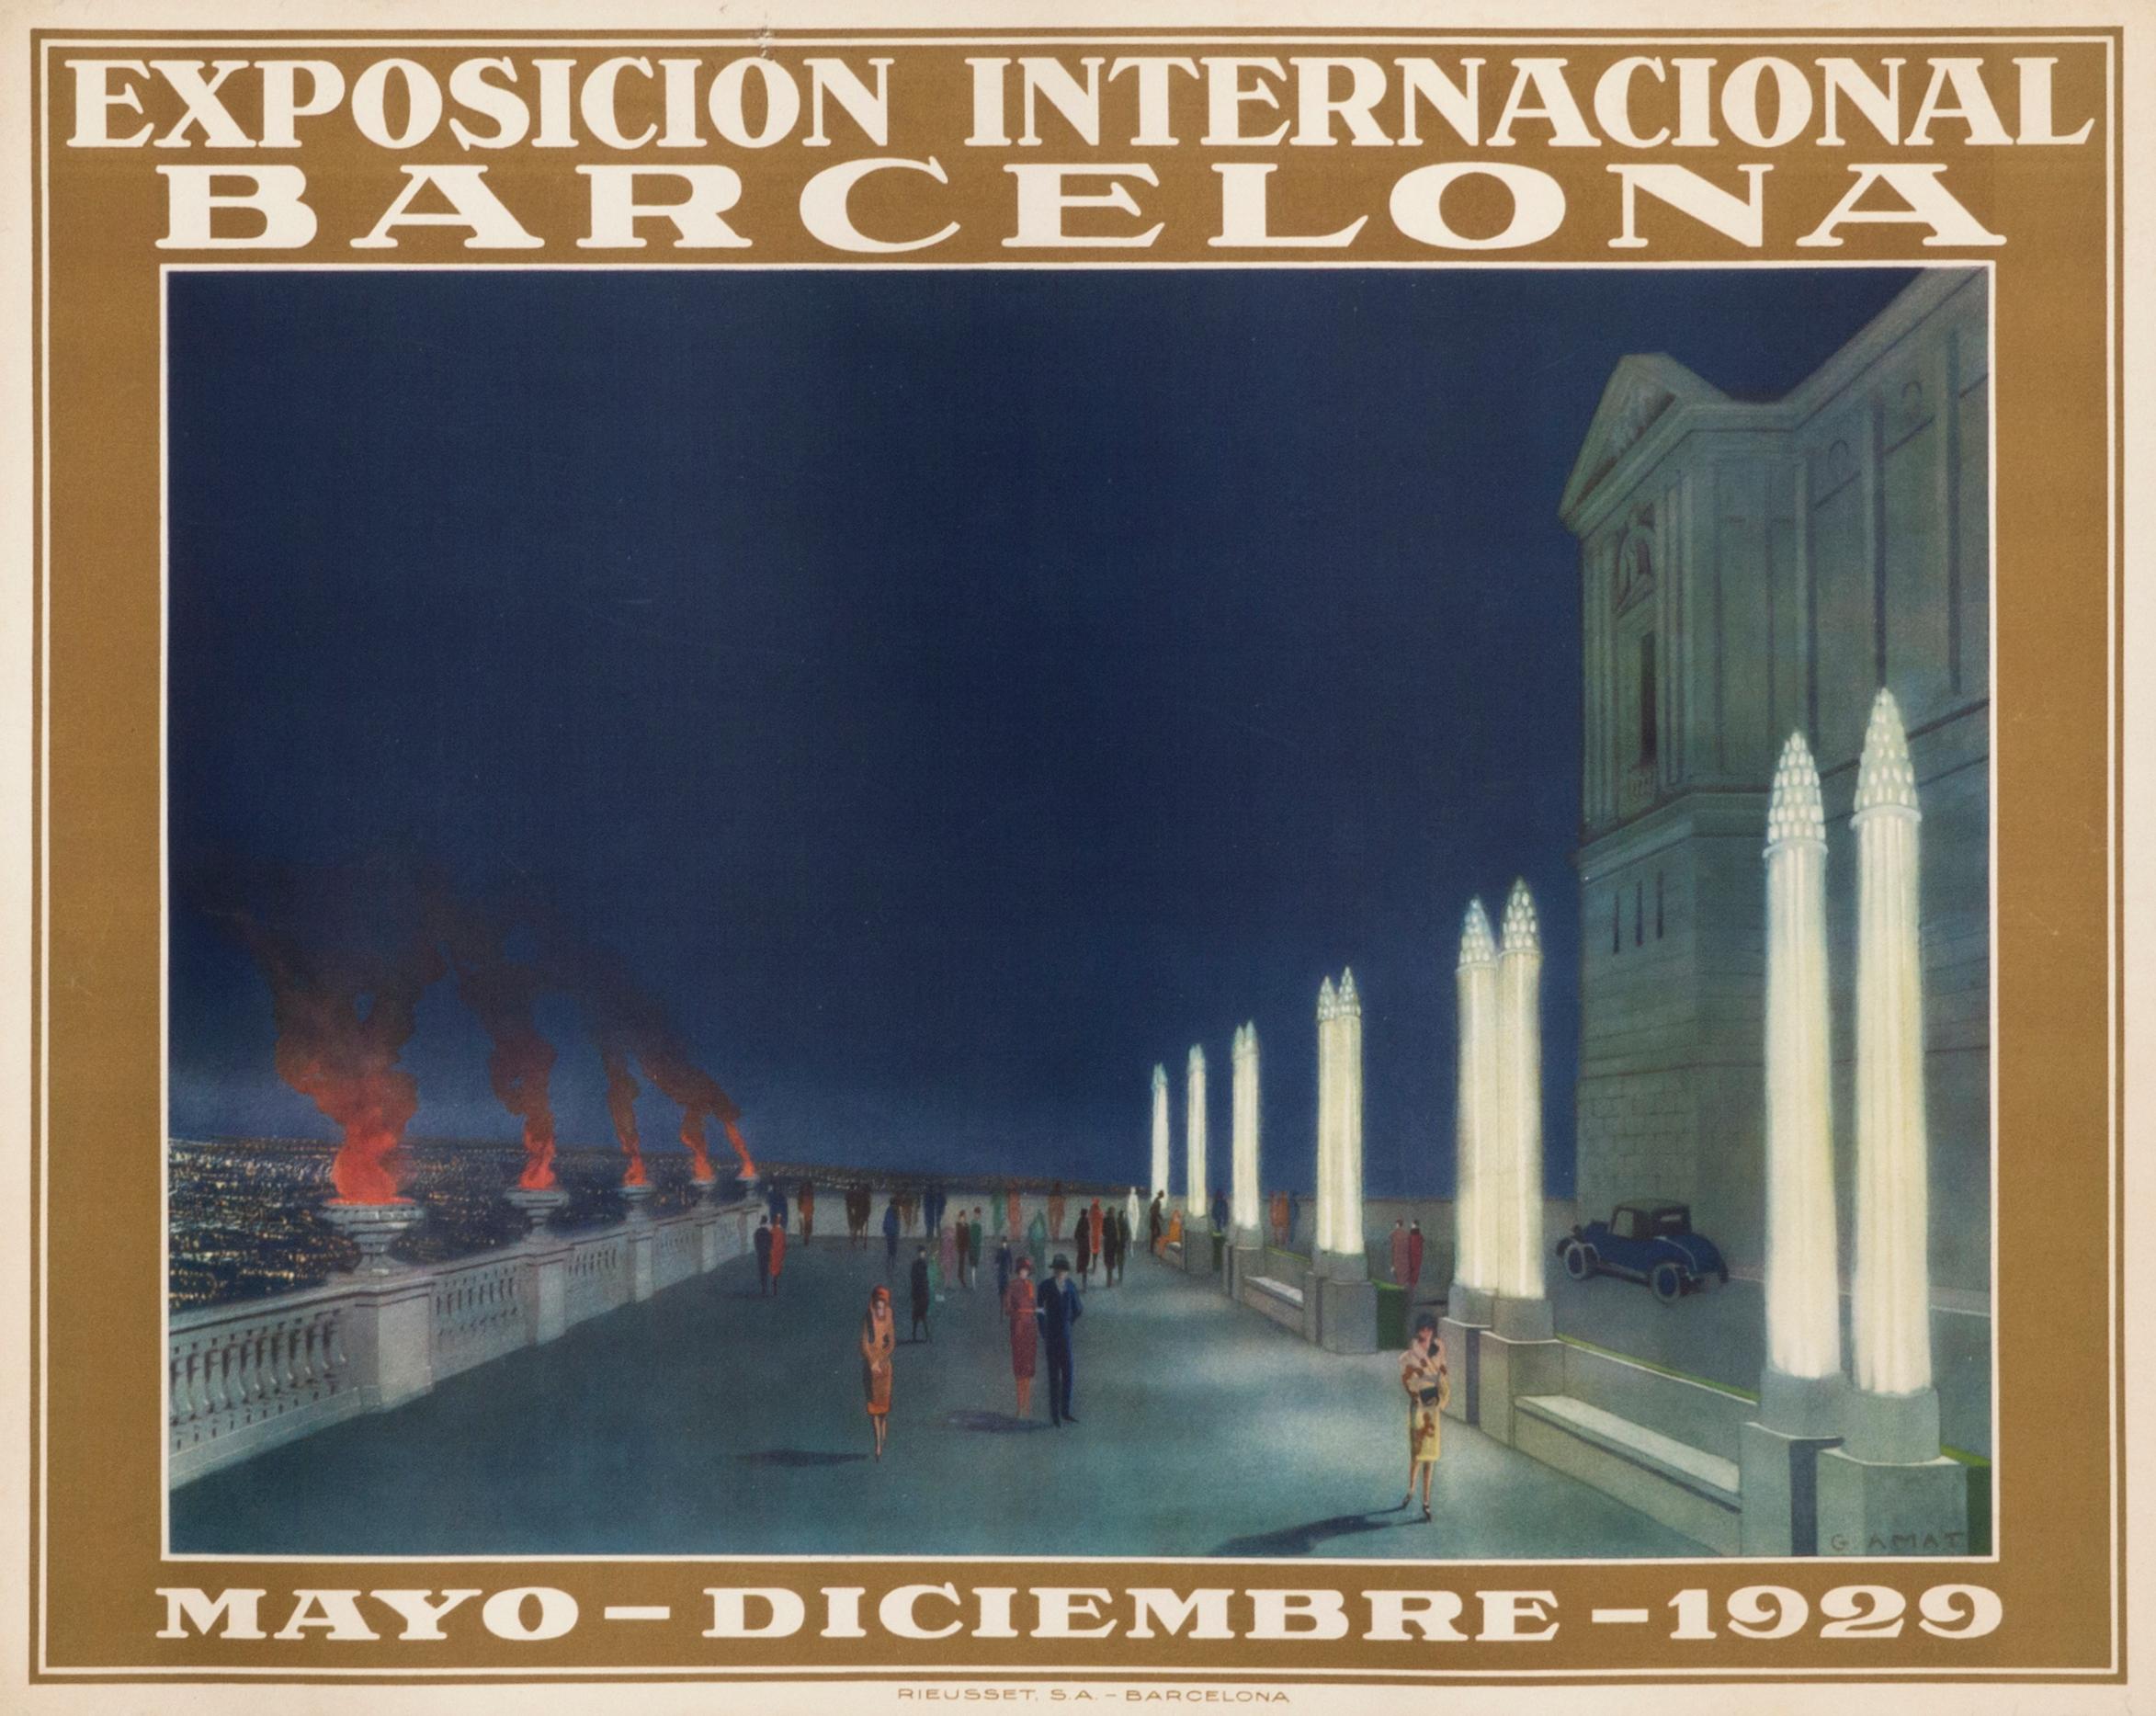 "Exposicion Internacional Barcelona" International Exposition Original Poster - Print by G. Amat